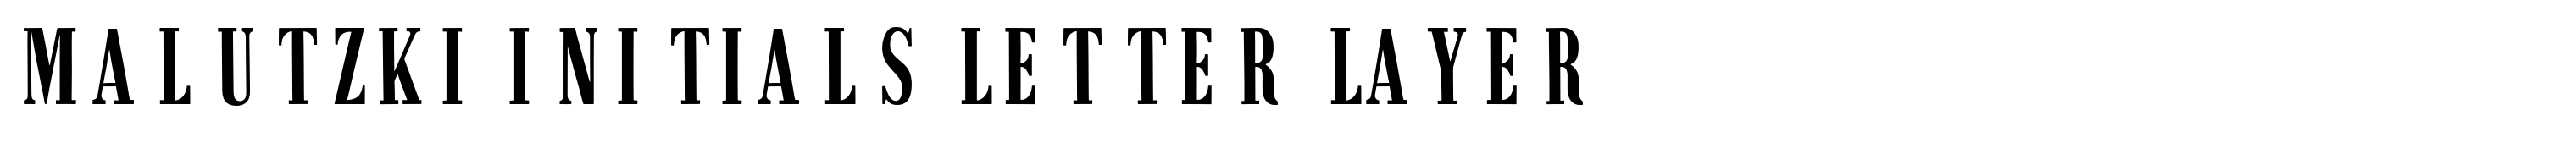 Malutzki Initials Letter Layer